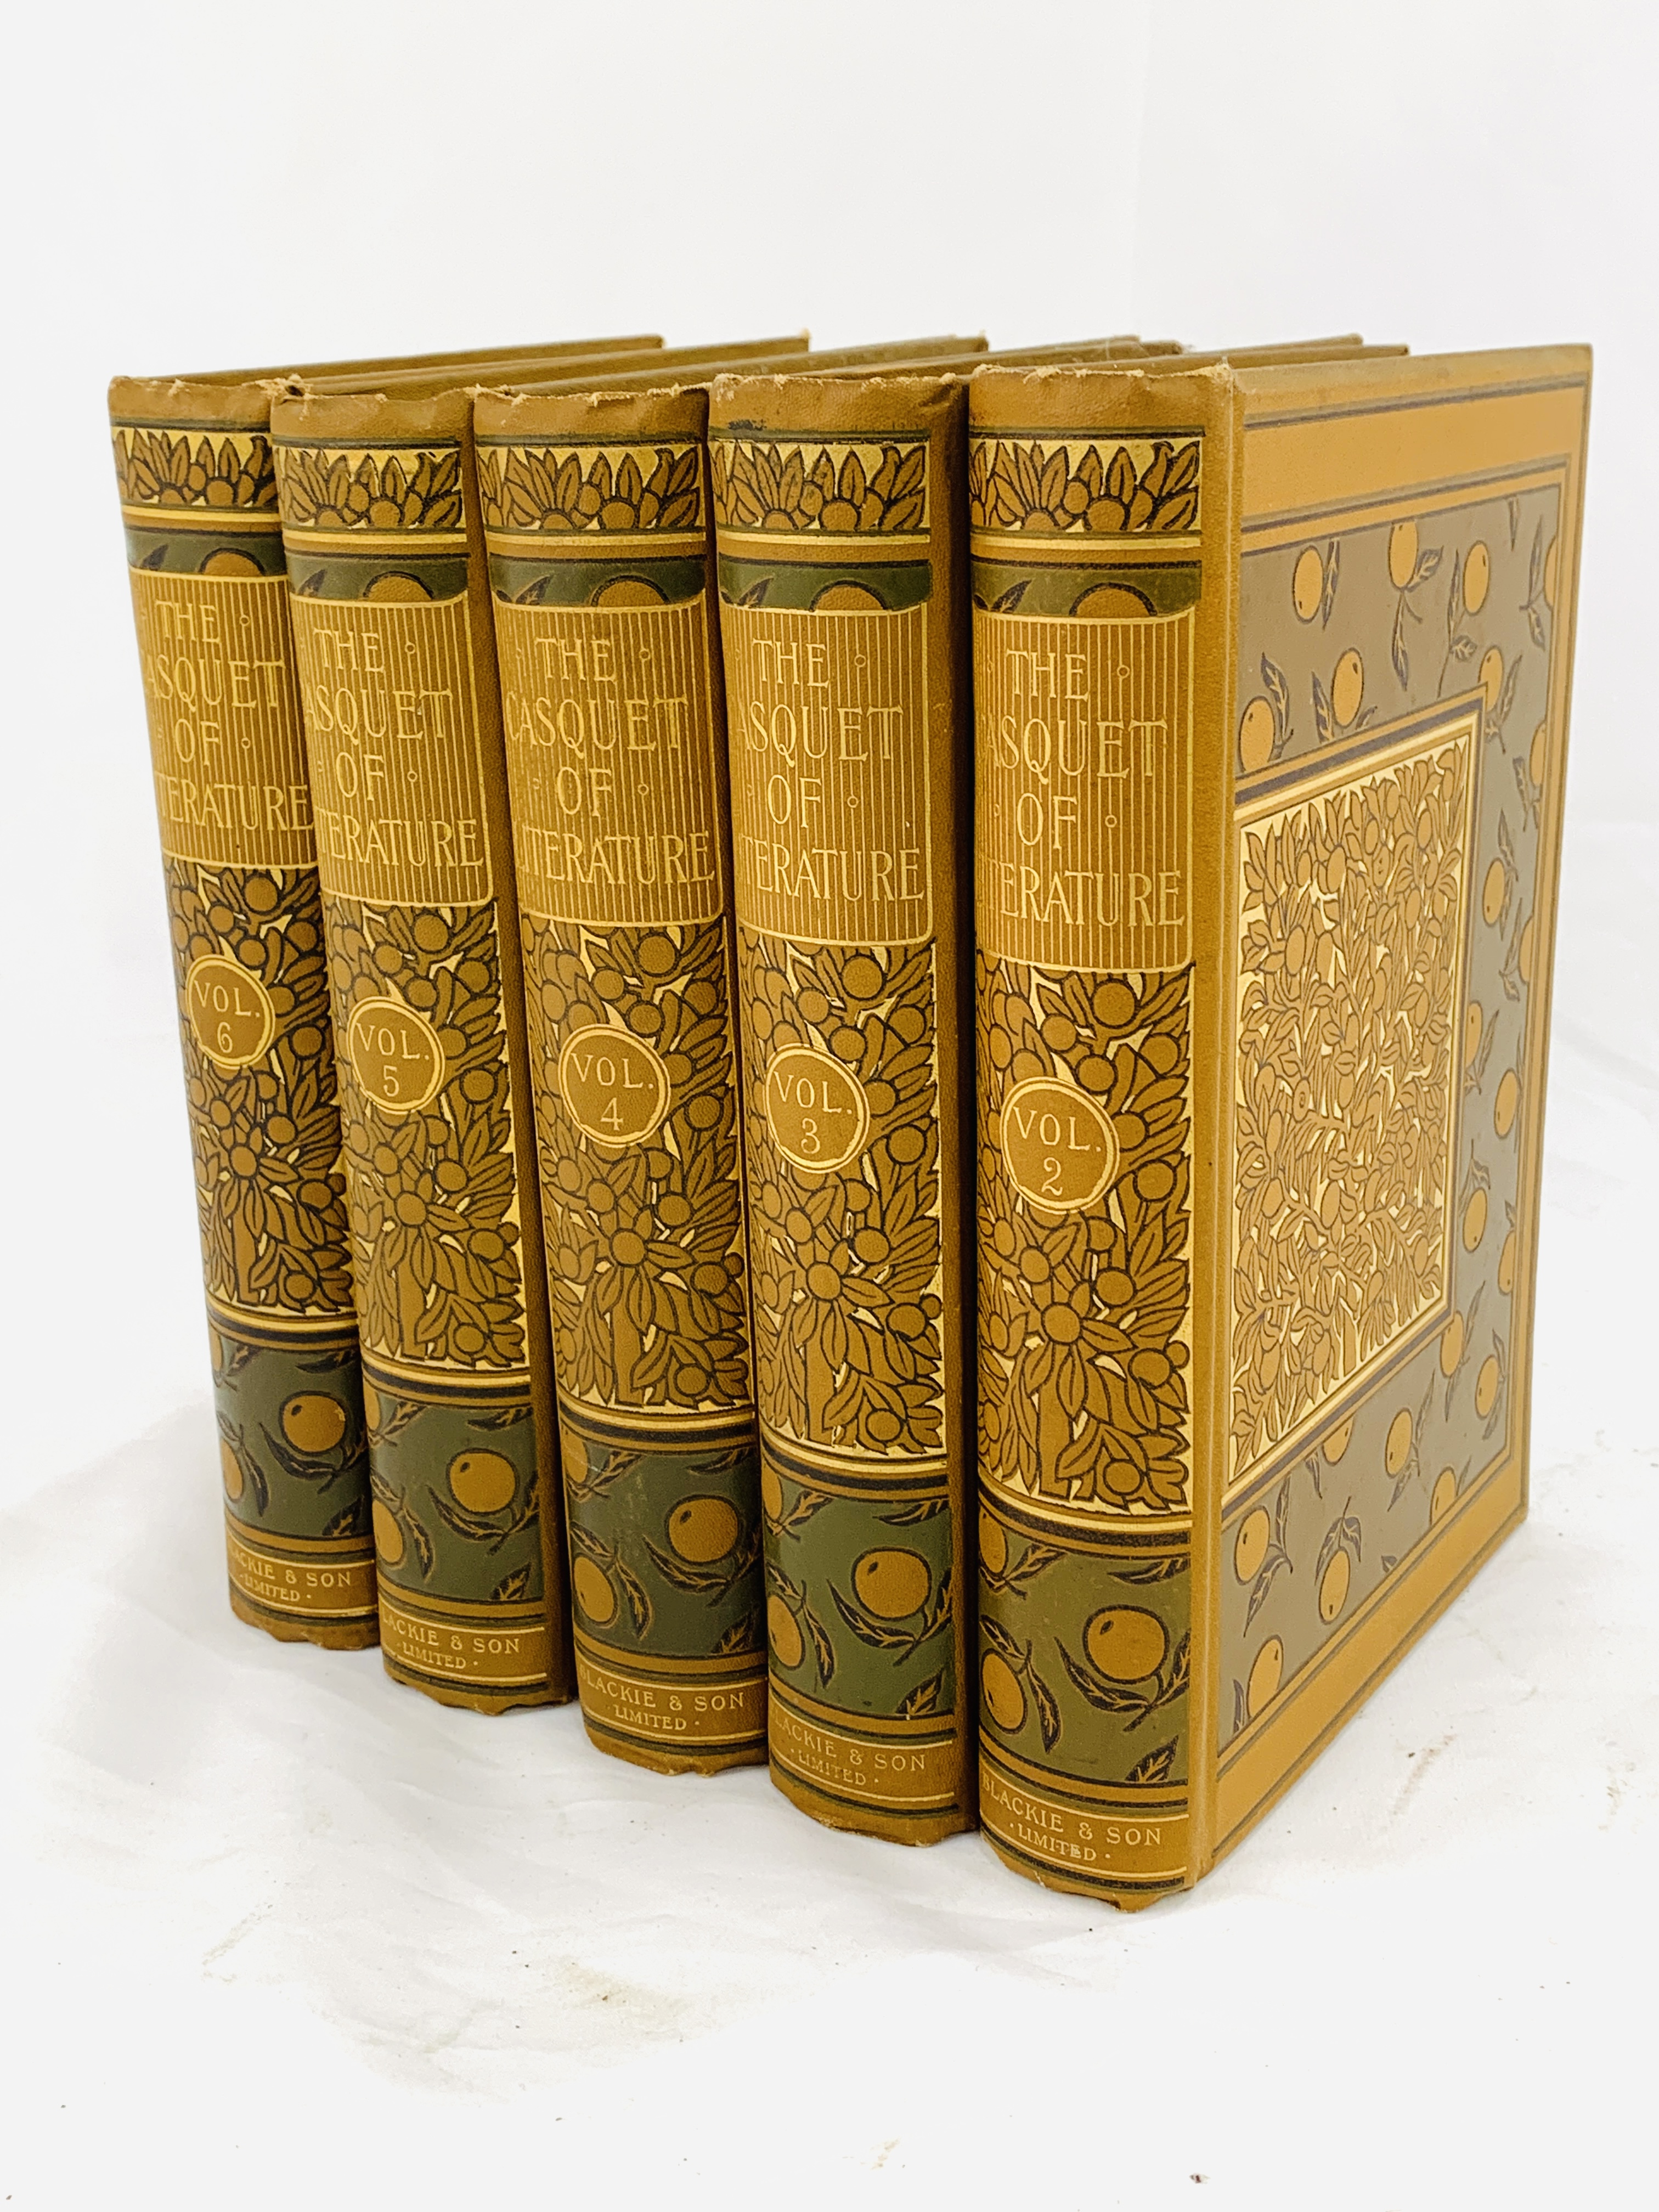 Casquet of Literature, 5 volumes in Art Nouveau cloth bindings